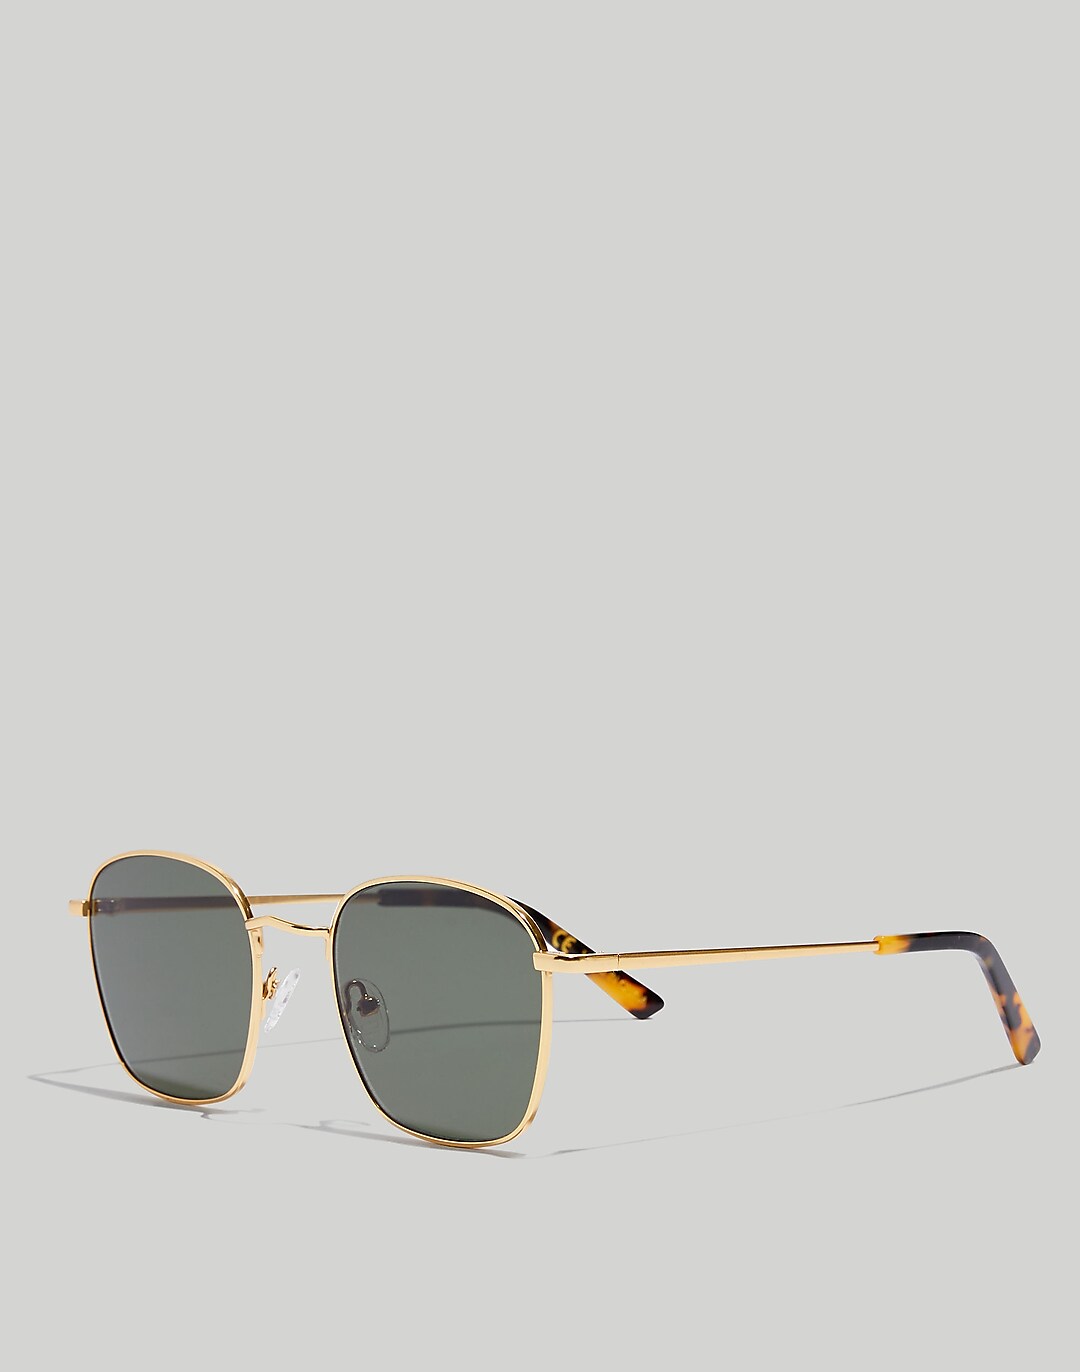 Madewell Fest Aviator Sunglasses in True Black - Size One S